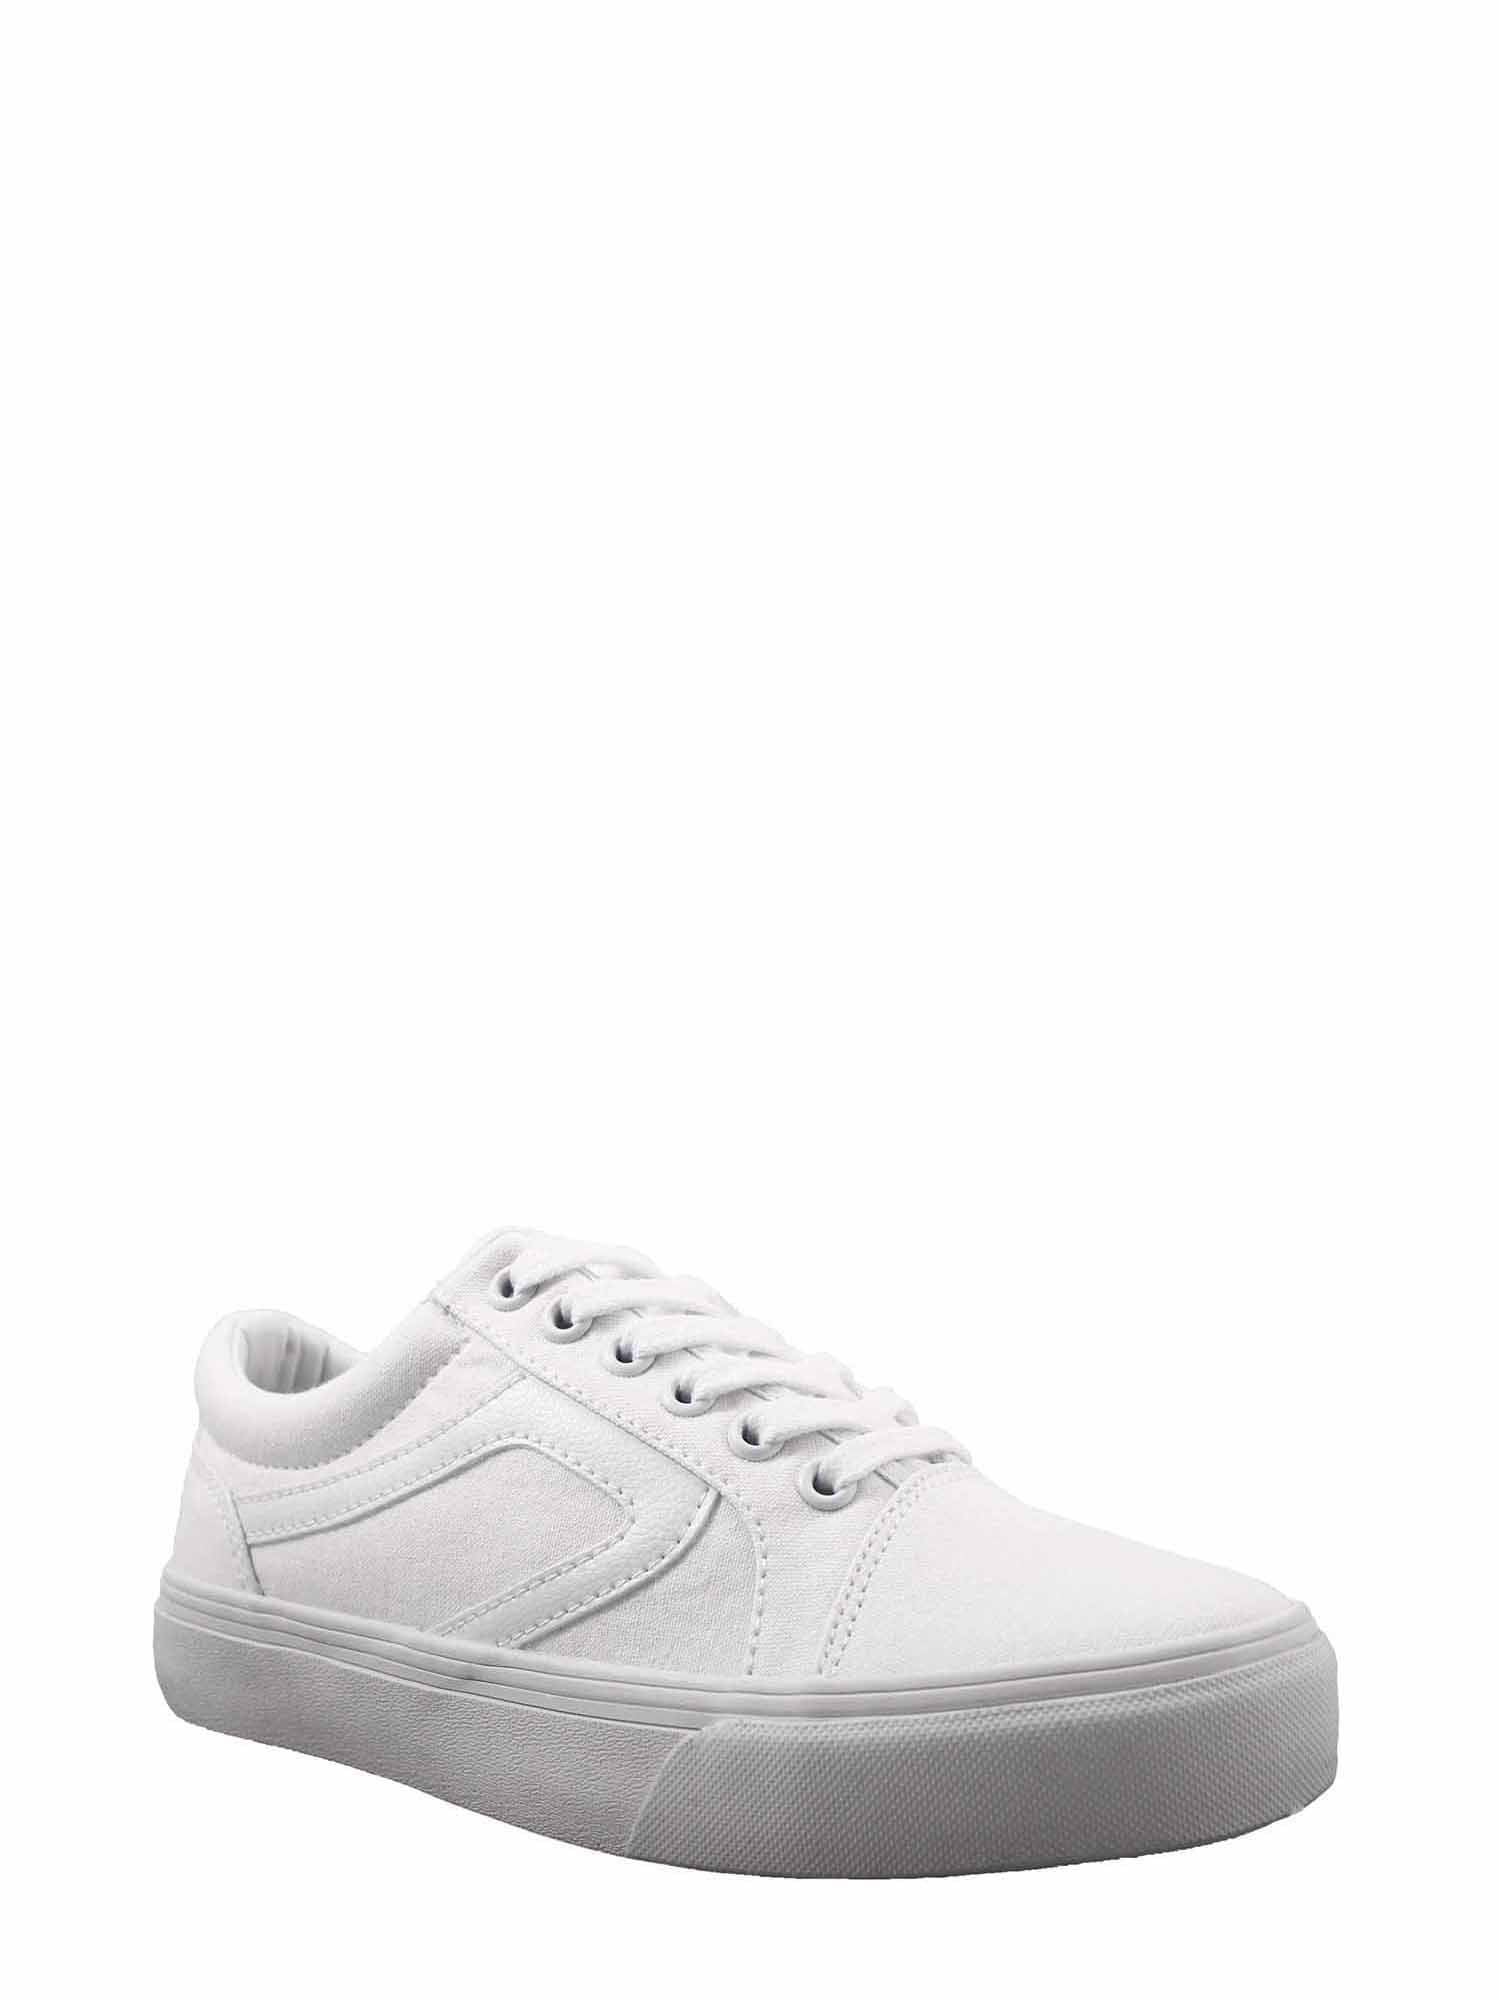 walmart white sneakers womens